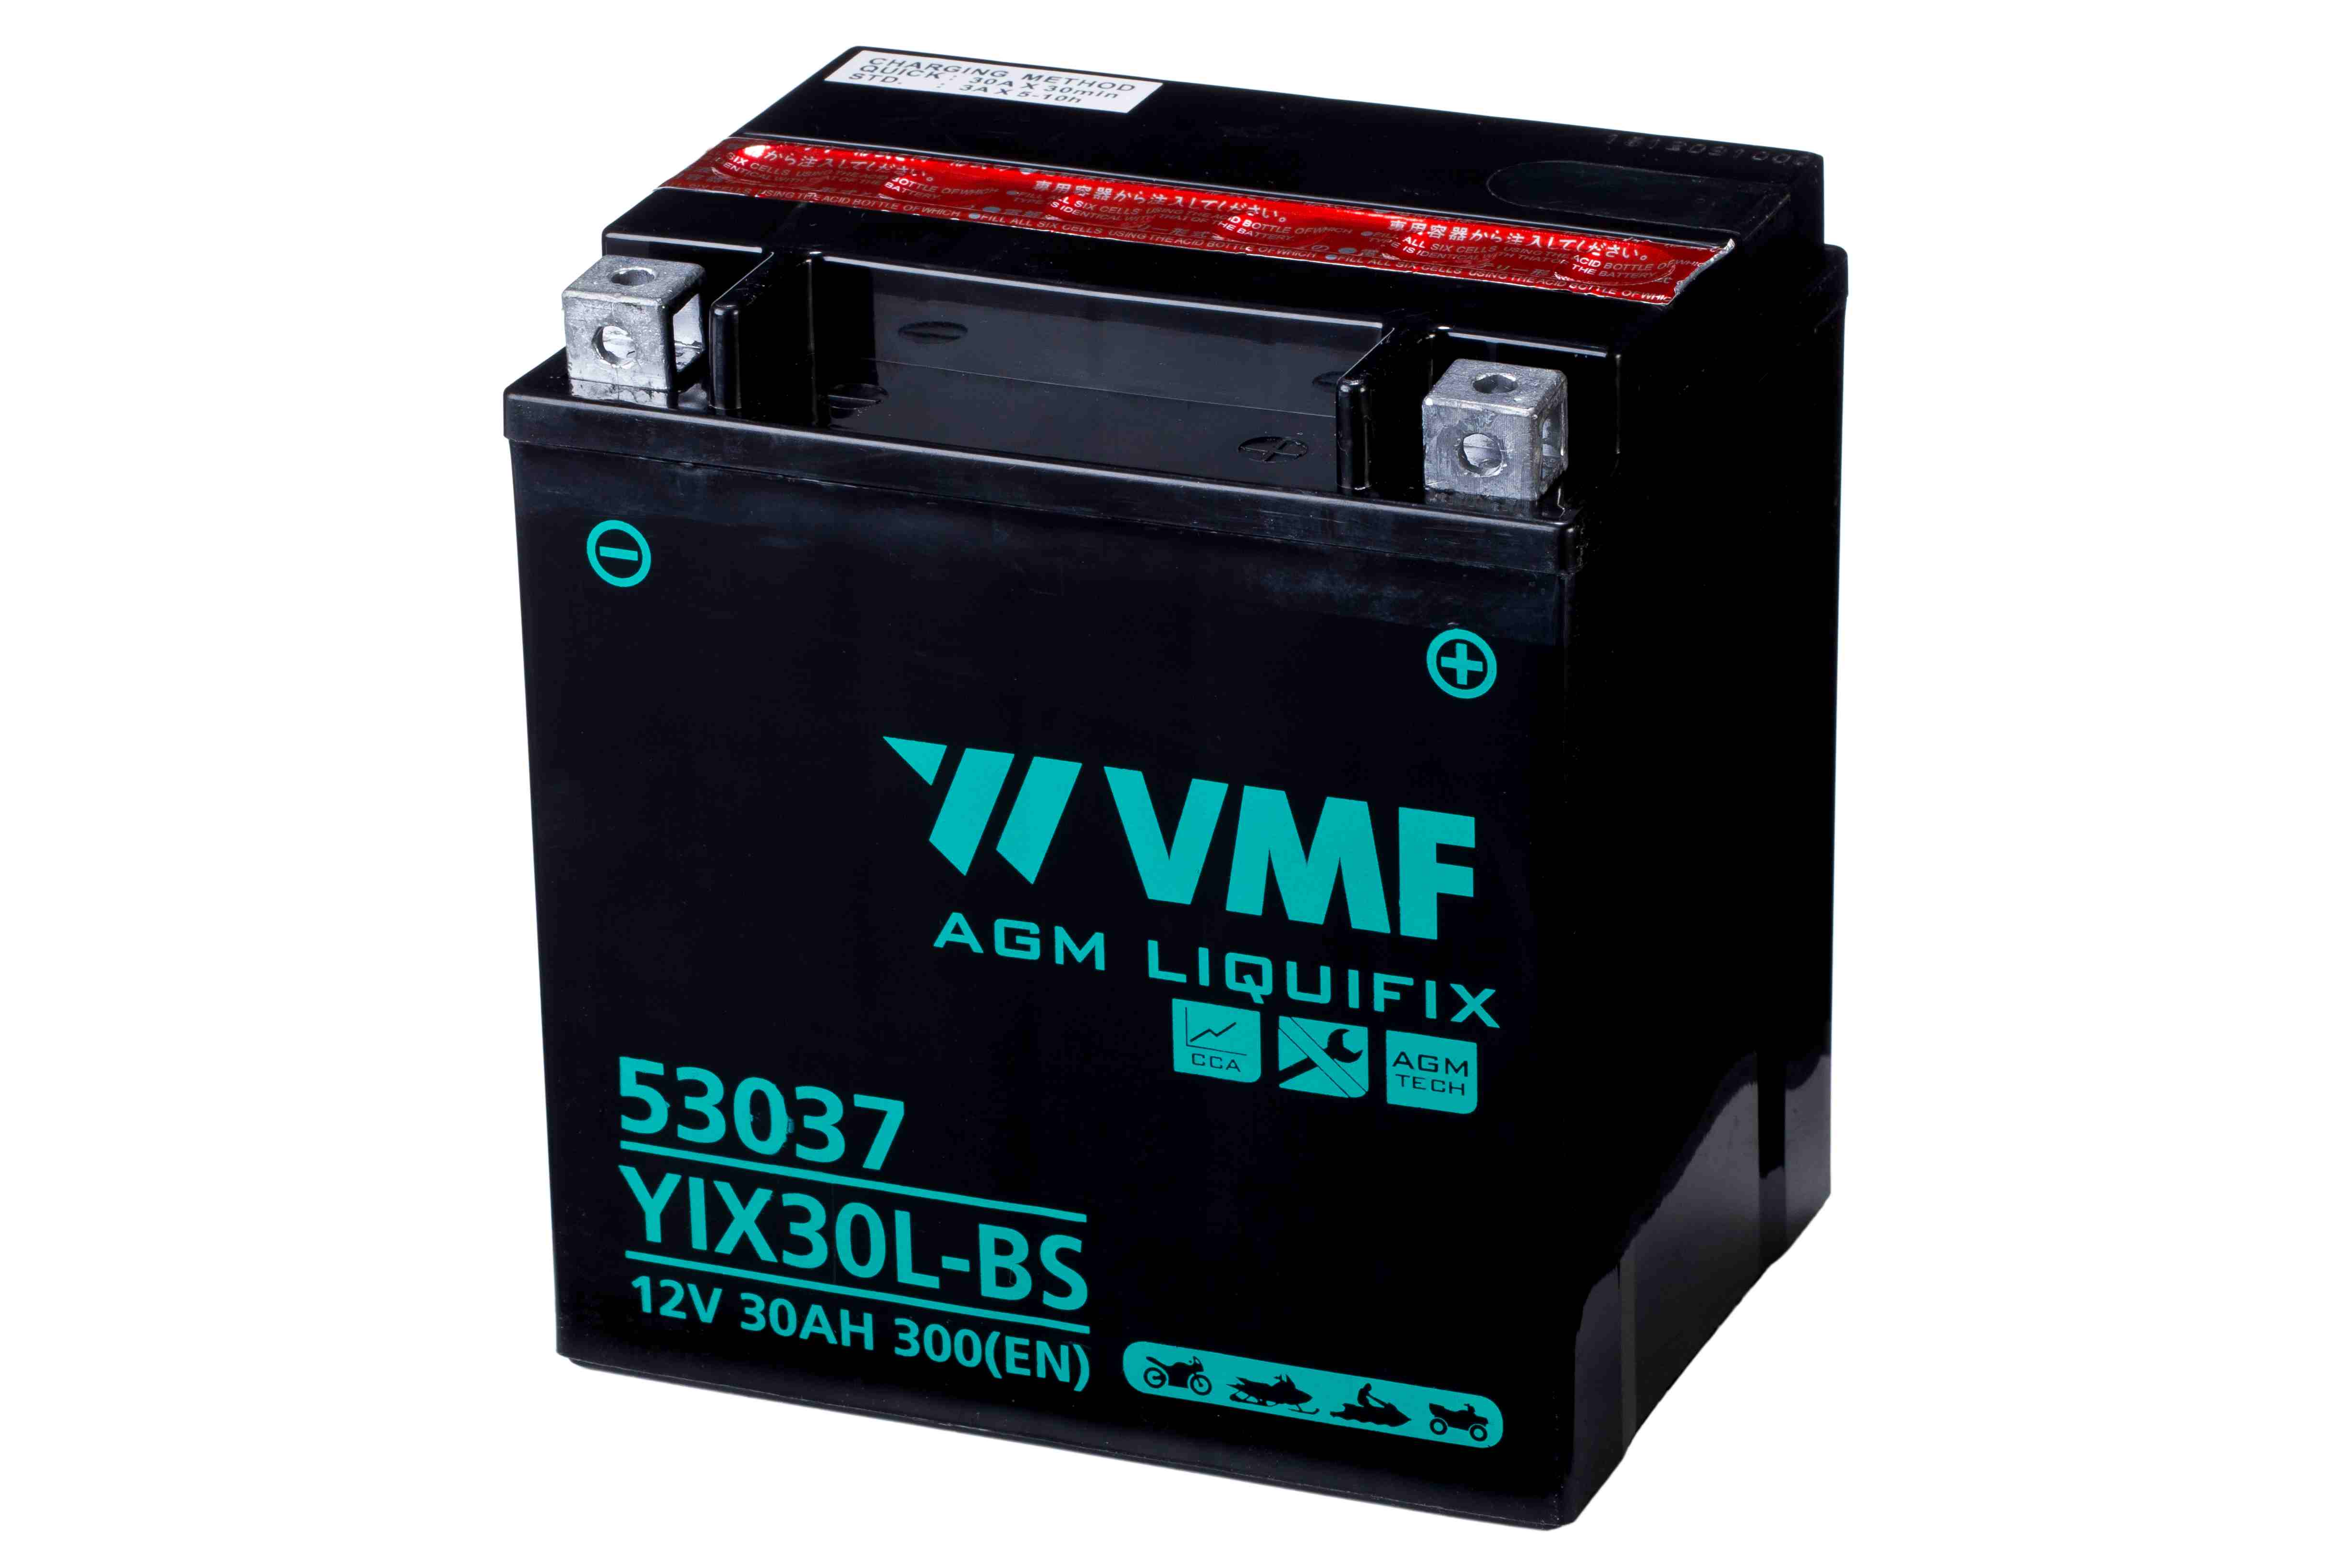 VMFYIX30L-BS53037